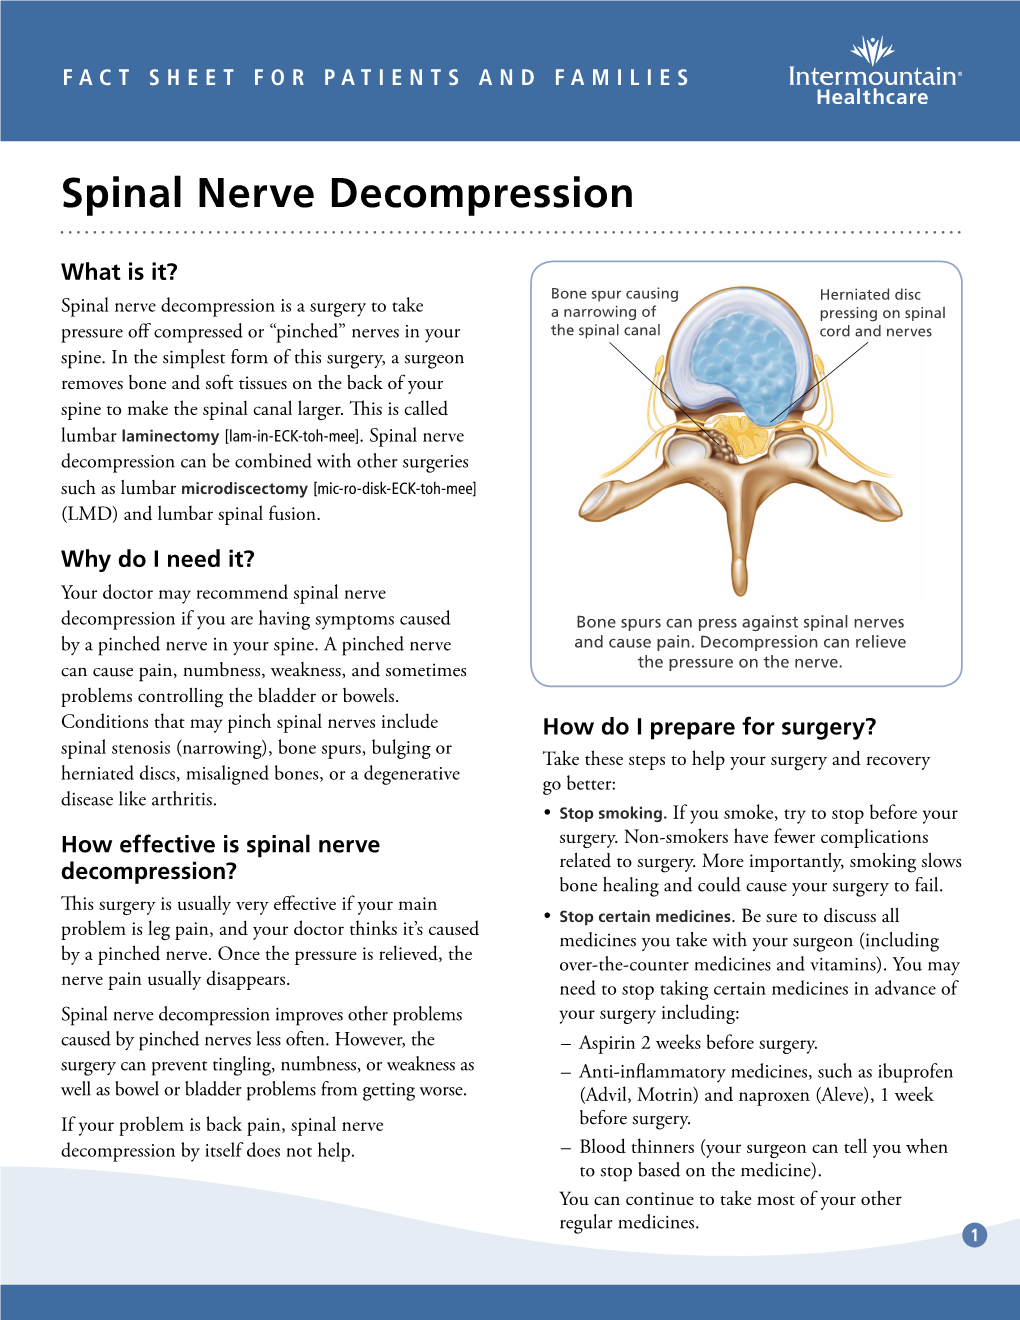 Spinal Nerve Decompression Fact Sheet